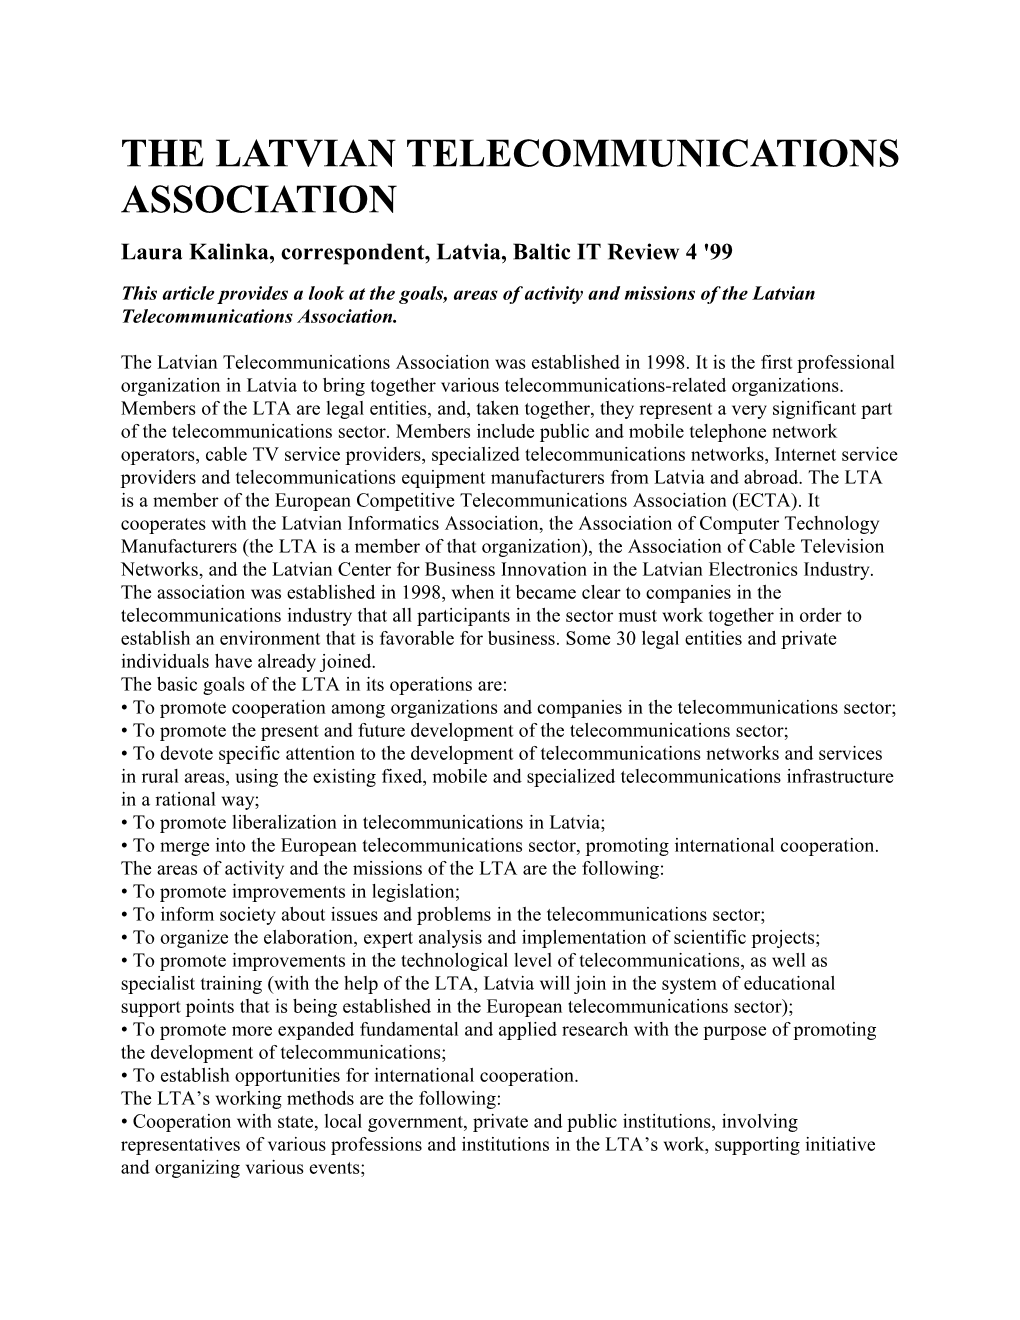 The Latvian Telecommunications Association